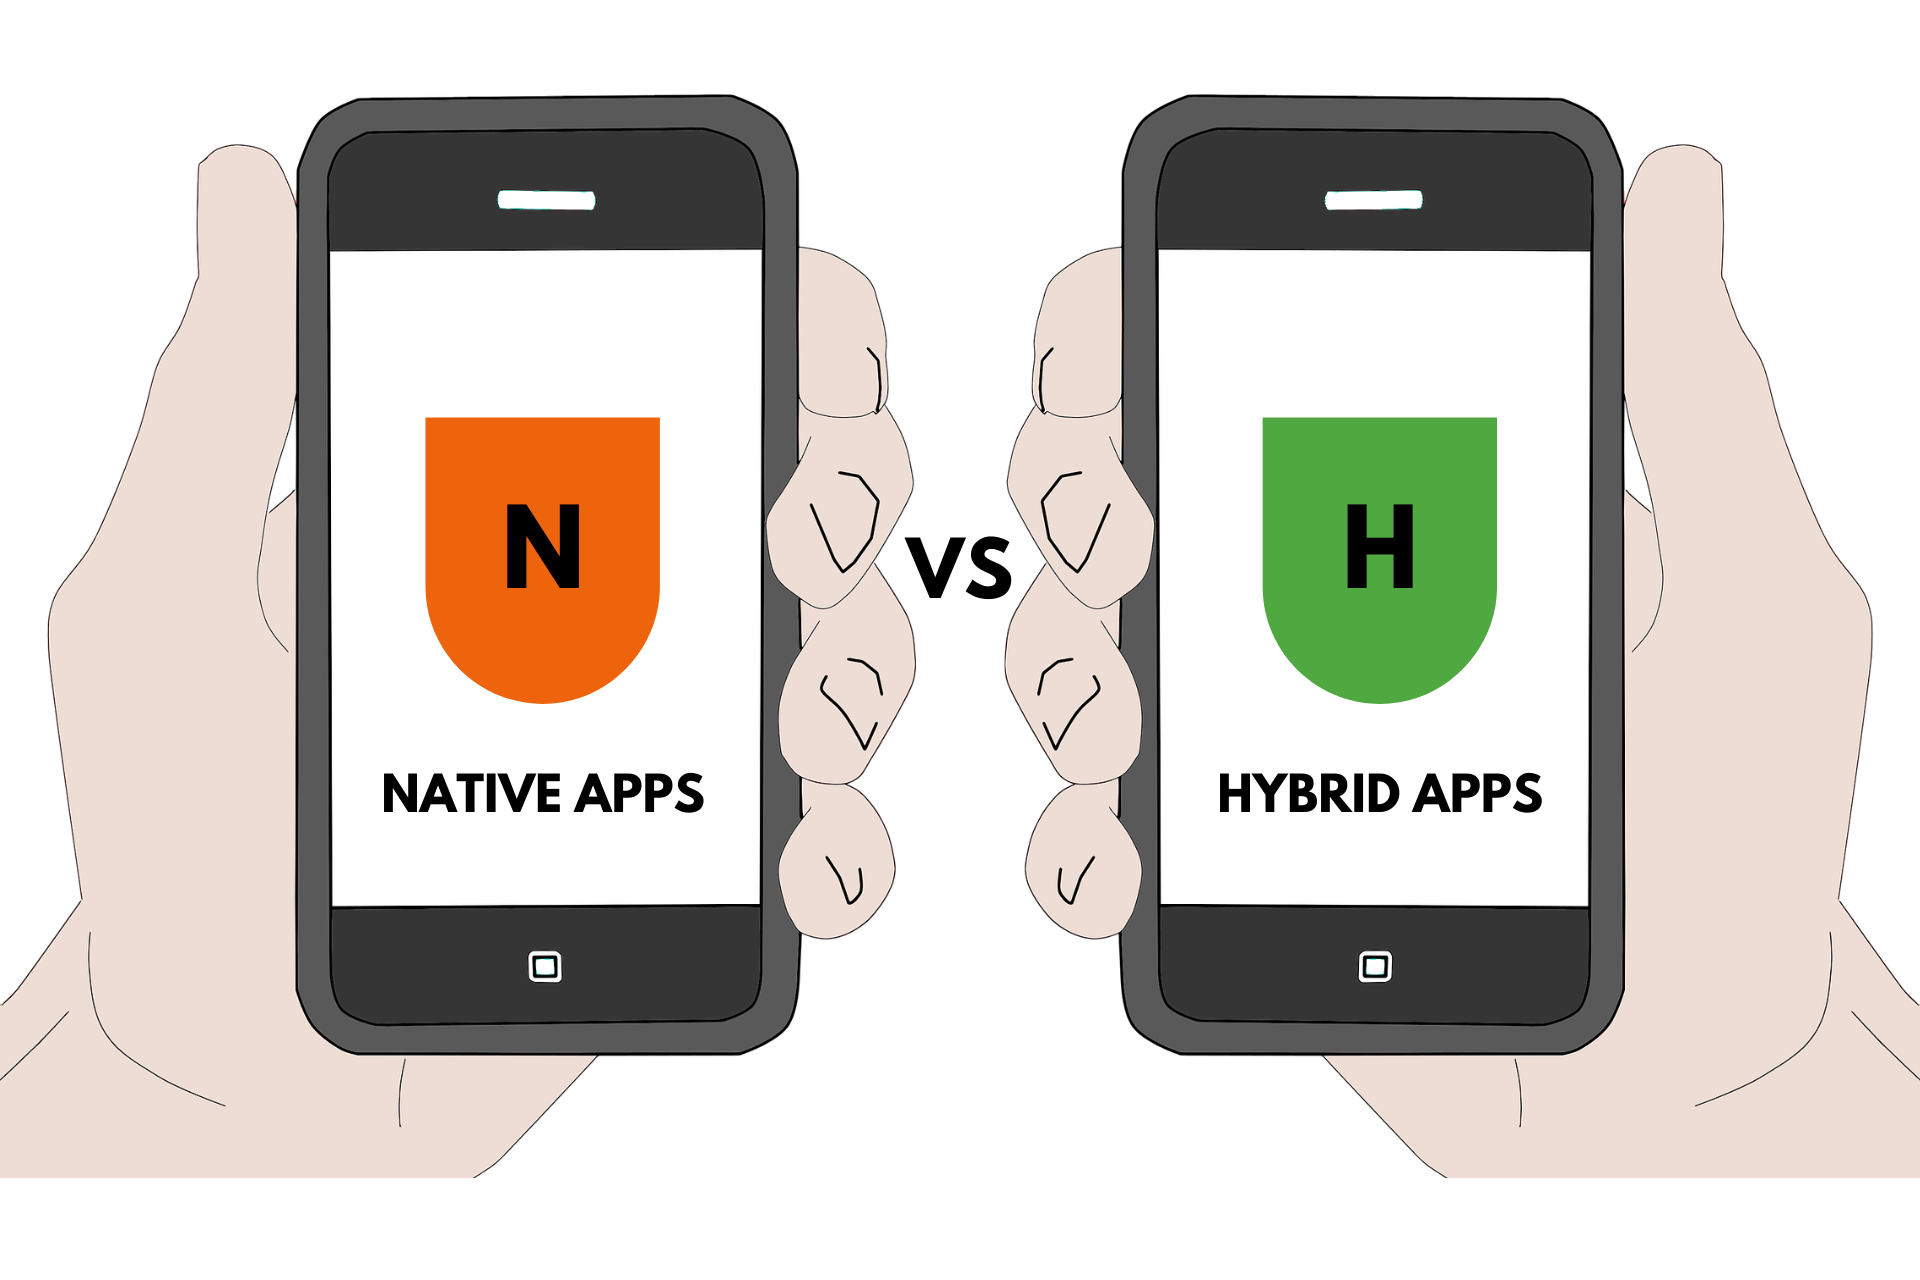 Native App Development vs. Hybrid App Development